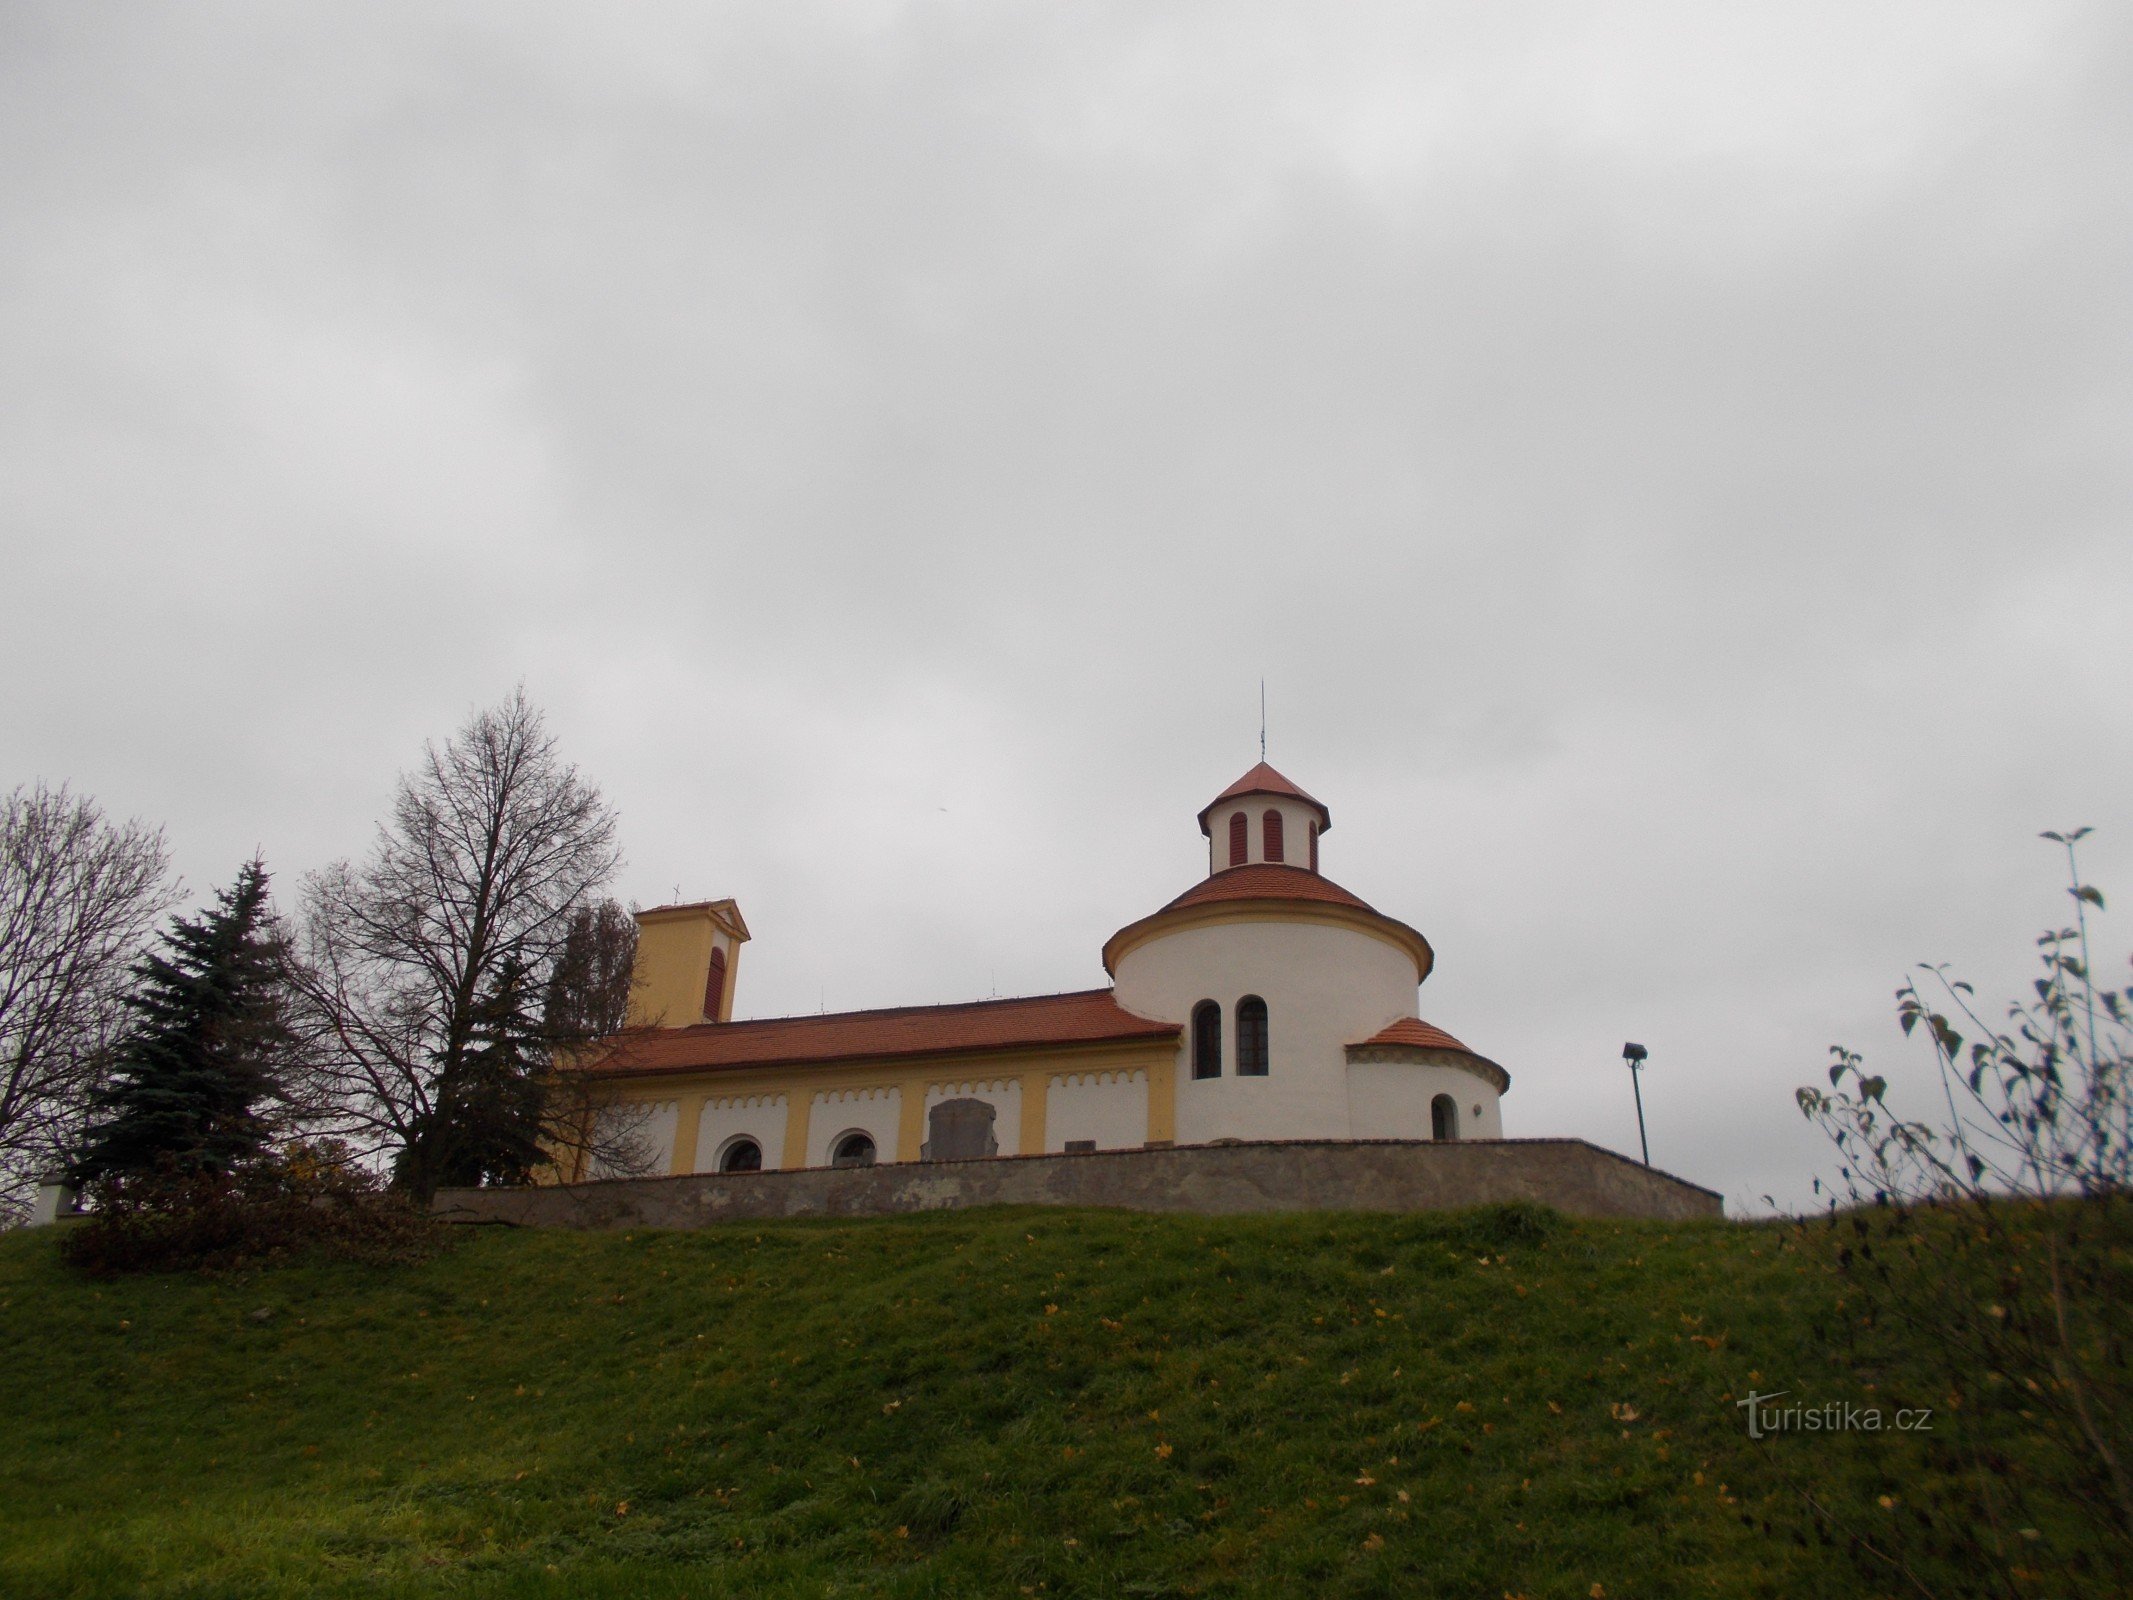 Kirche St. Peter und Paul in Želkovice.